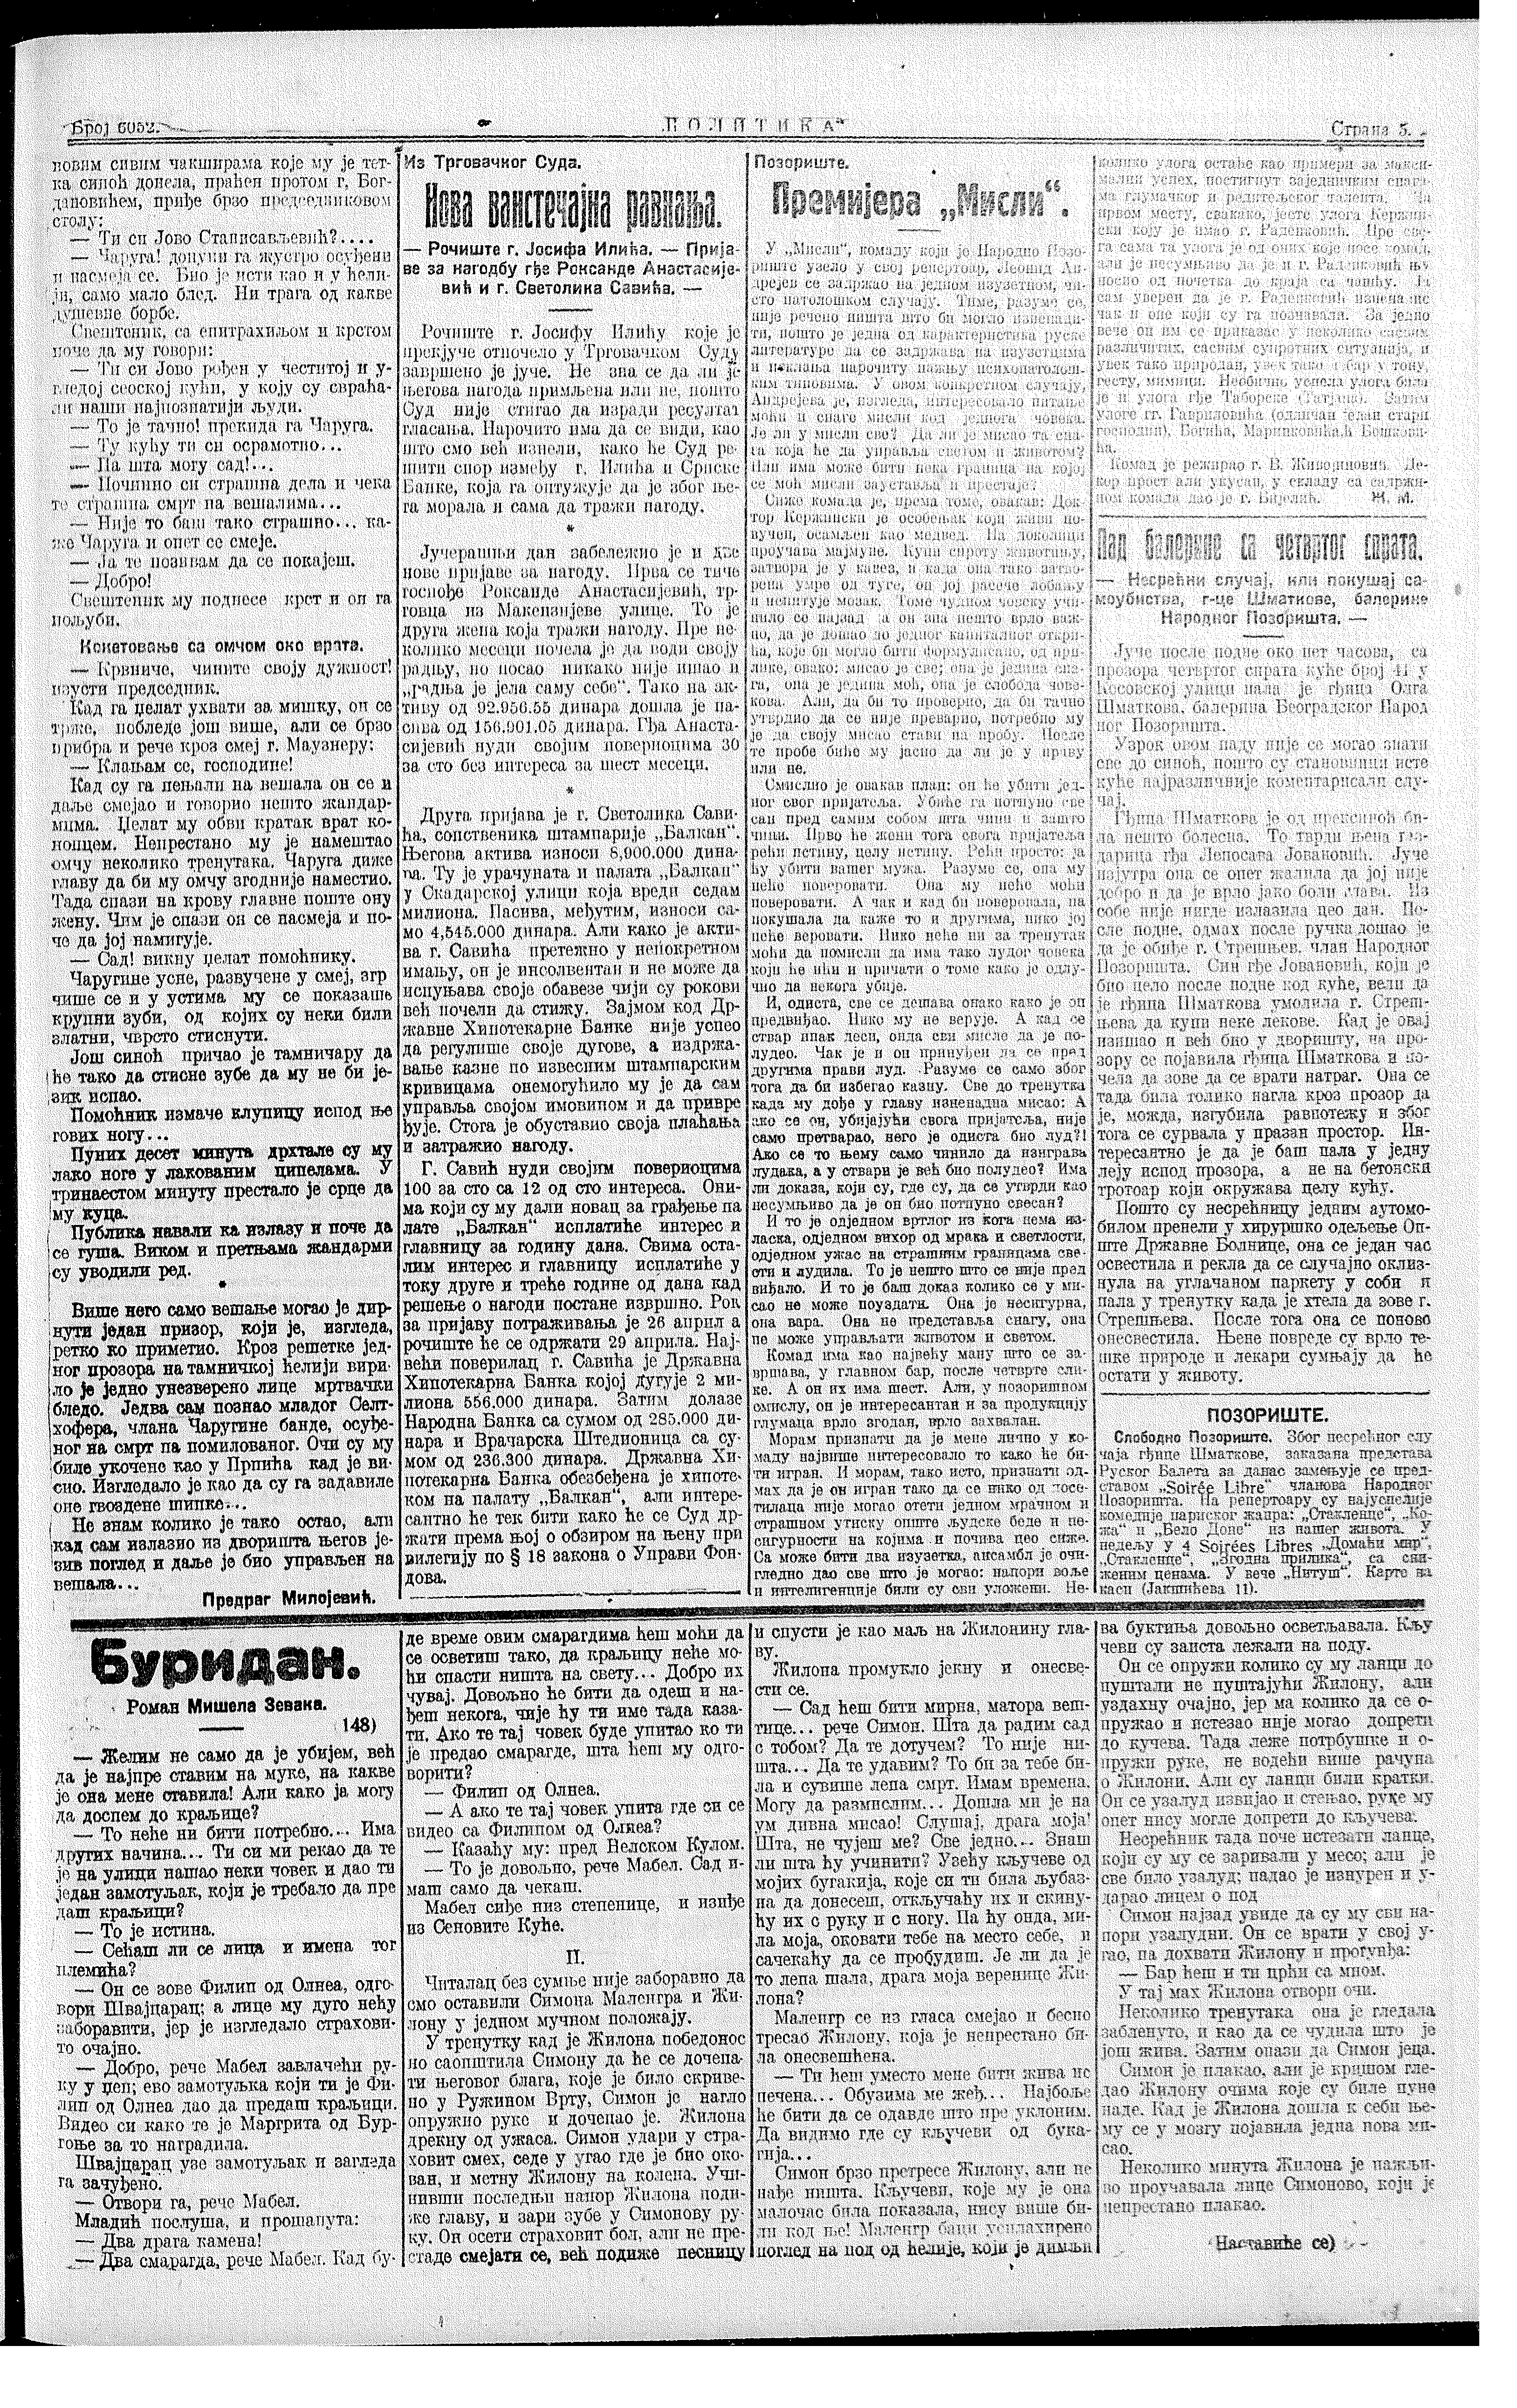 Vešanje Čaruge i Prpića 2, Politika, 28.02.1925.